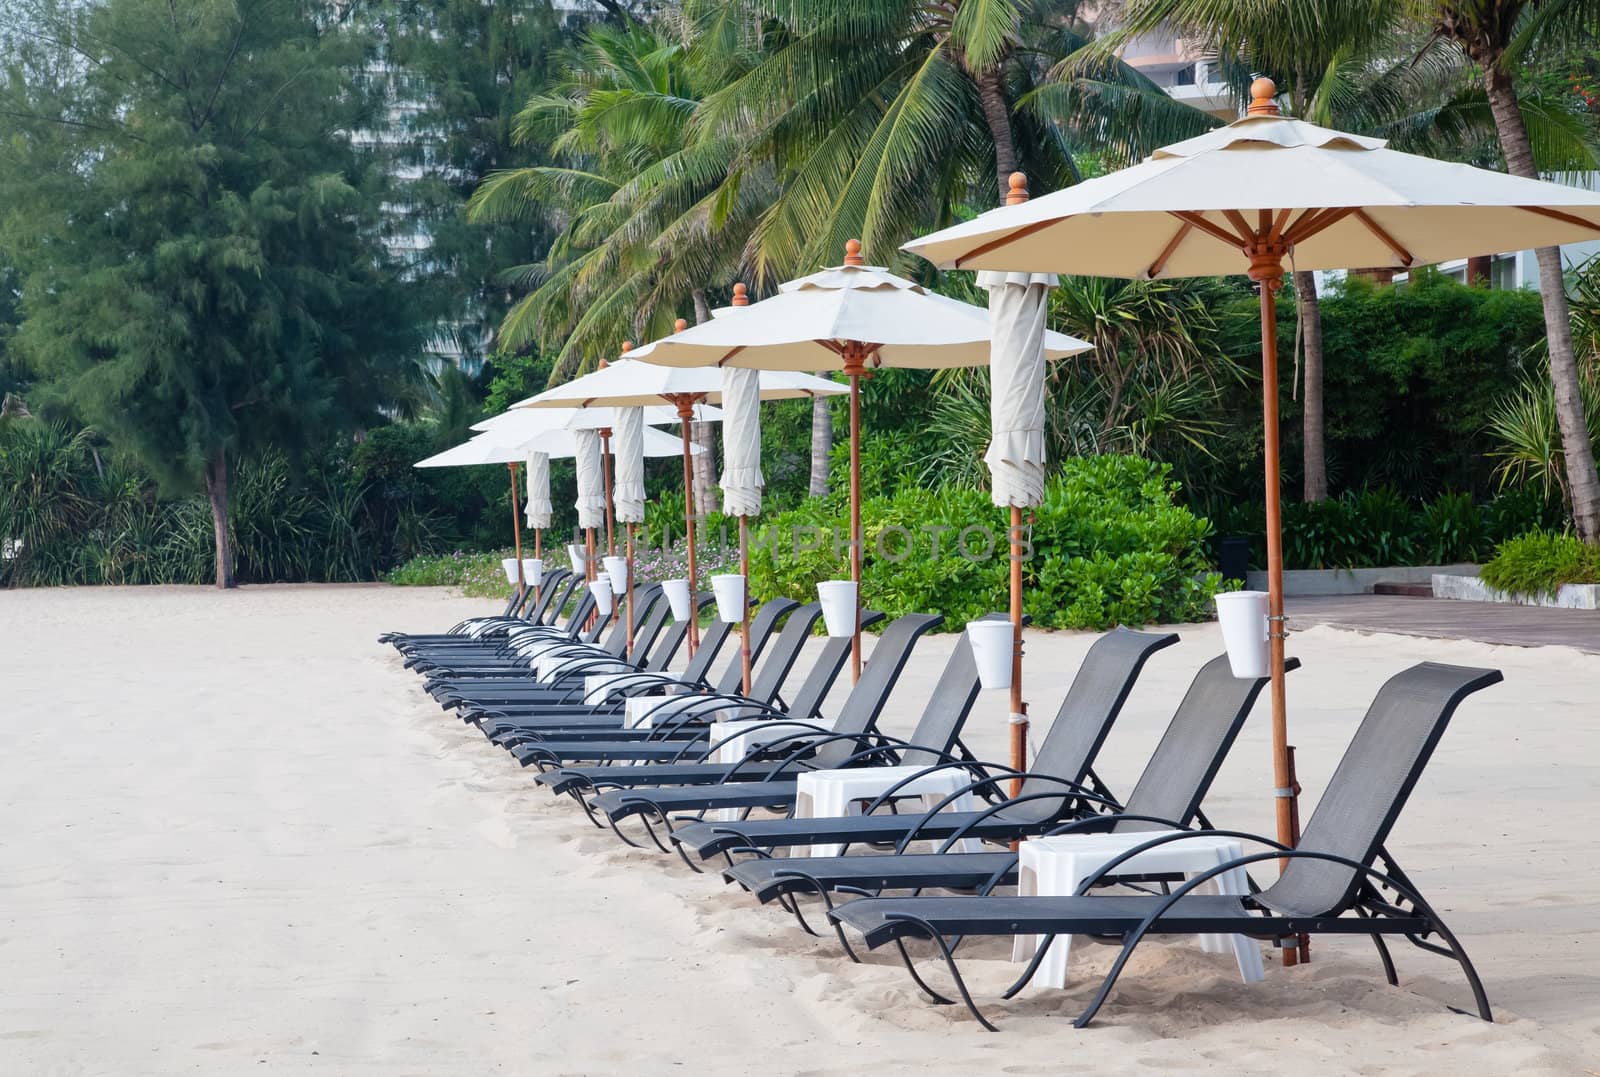 Beach chair and umbrella on tropical sand beach by FrameAngel